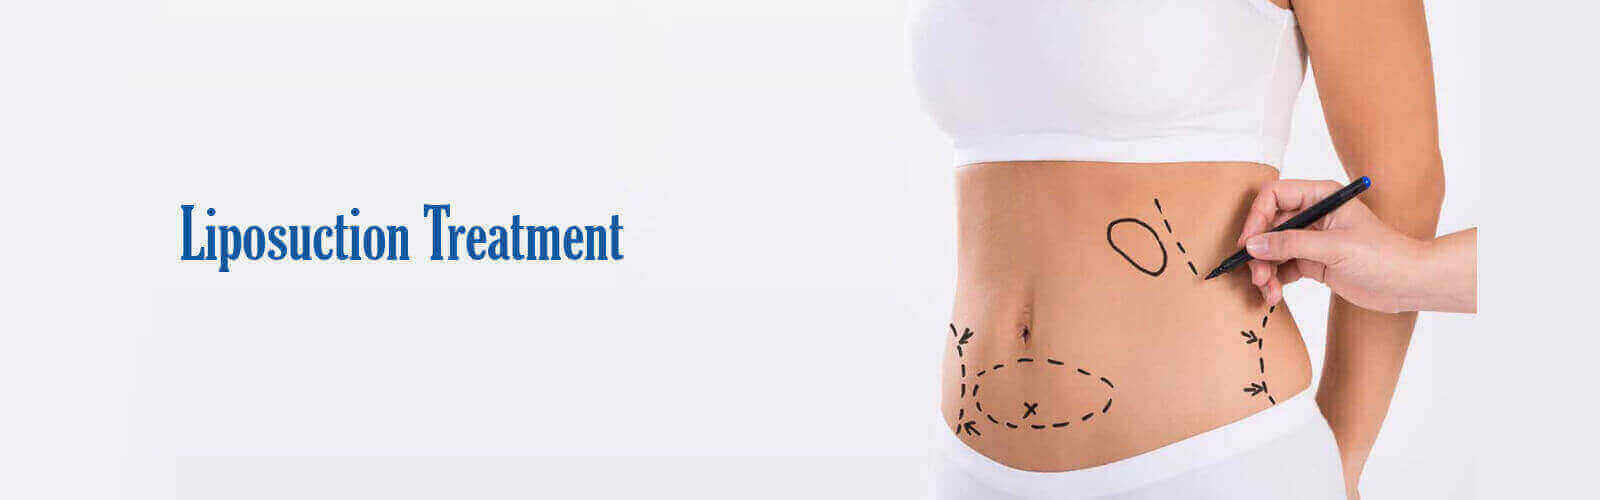 Liposuction Treatment in Spain